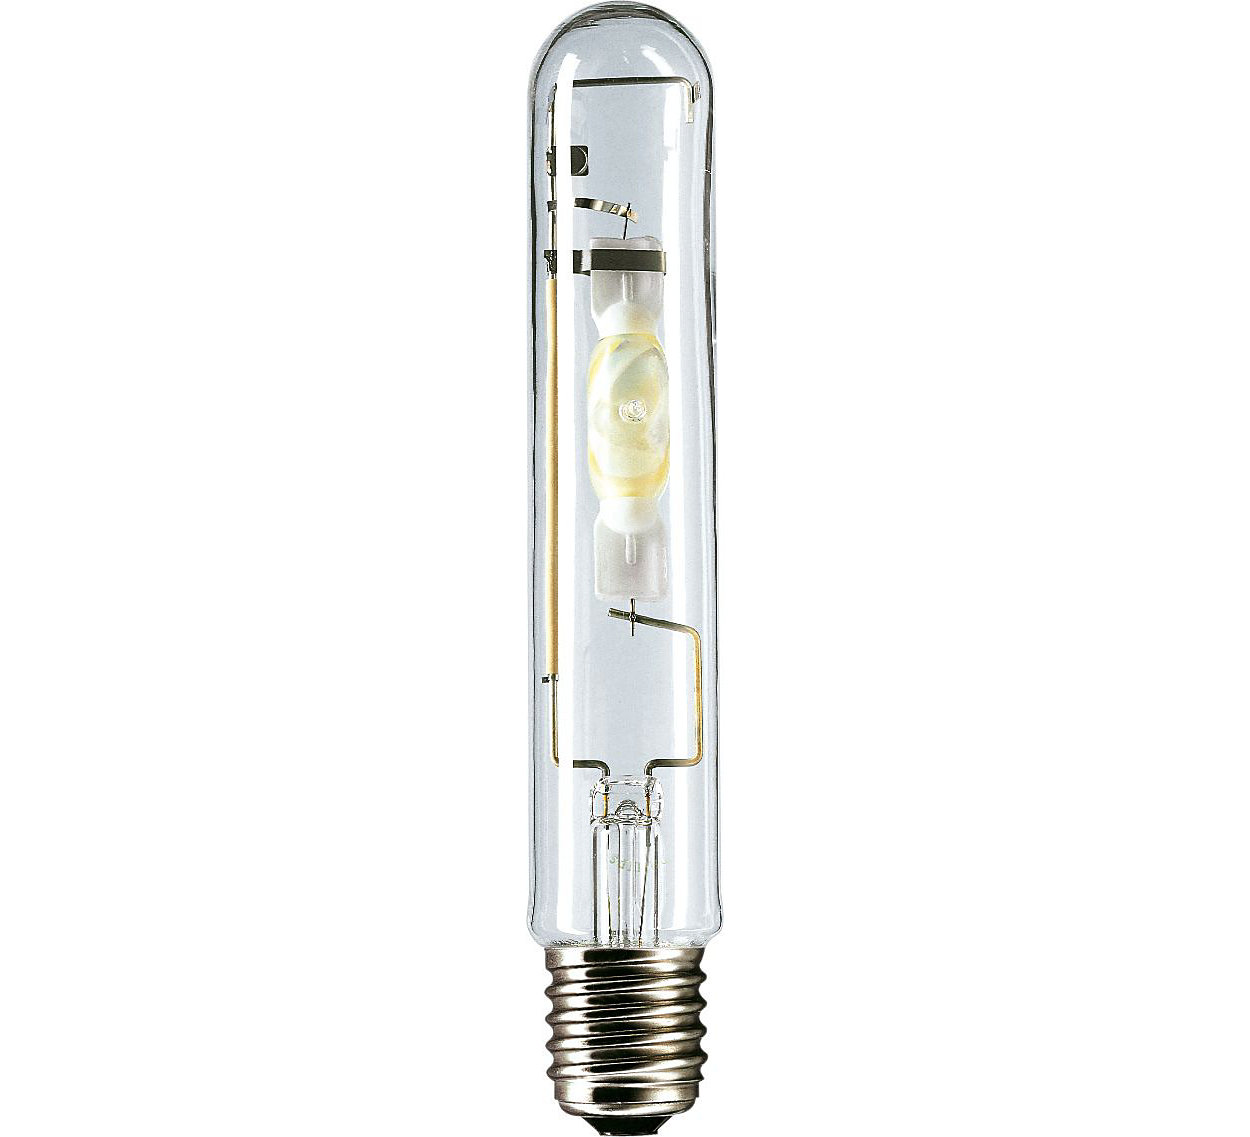 Philips Master HPI SON T Plus 250W E40 Halogen Metal Halide Lamp Bulb GROW LIGHT 